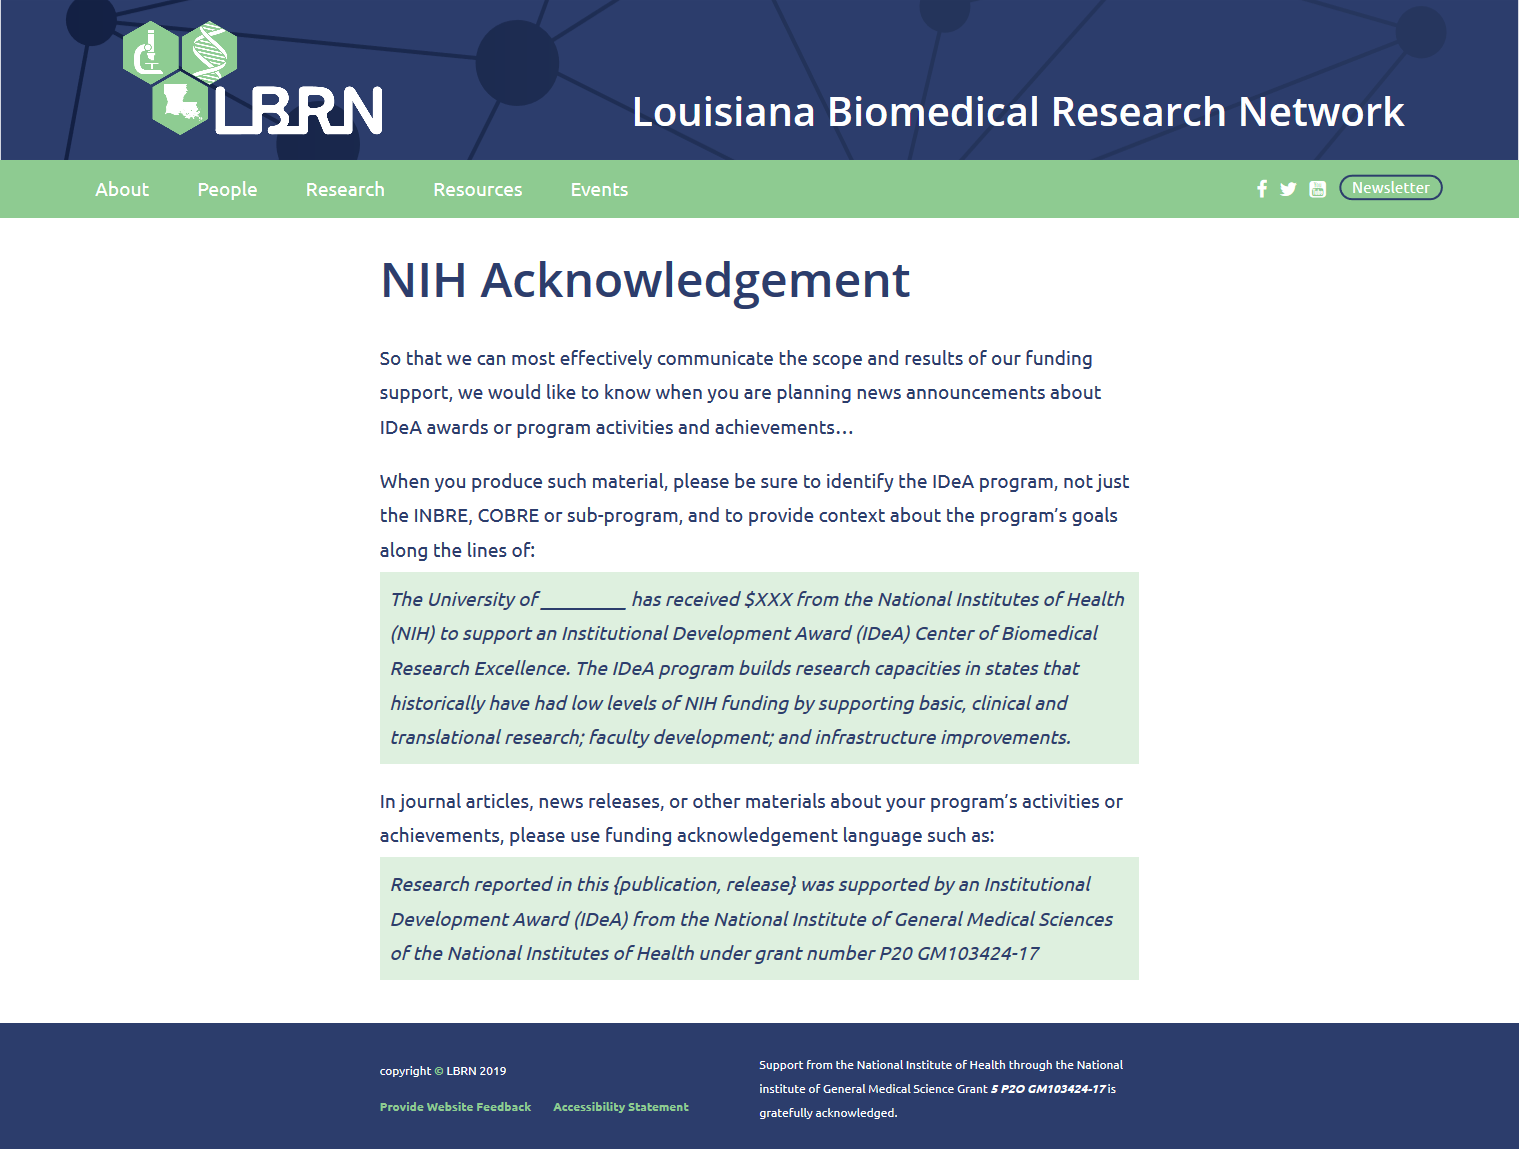 NIH Acknowledgement